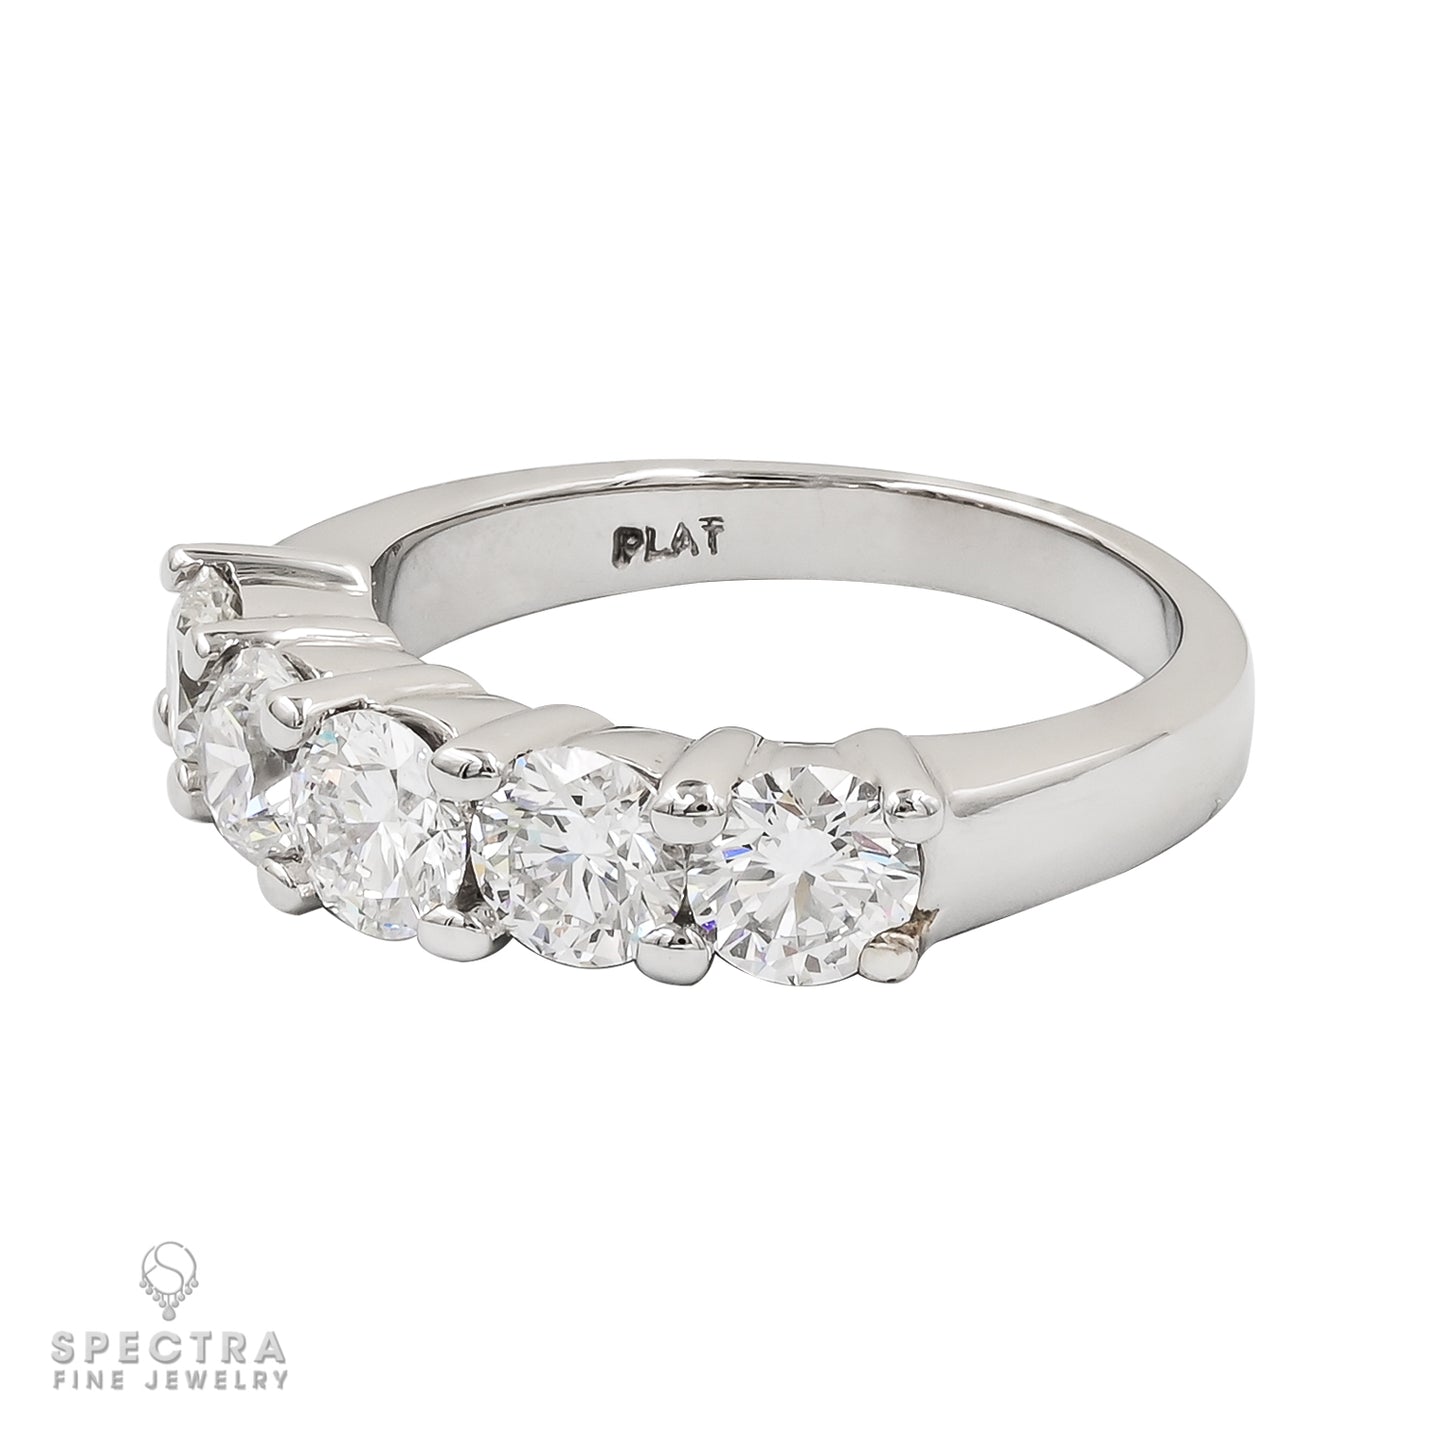 Spectra Fine Jewelry 2.0 ct.Diamond Five Stone Ring in Platinum